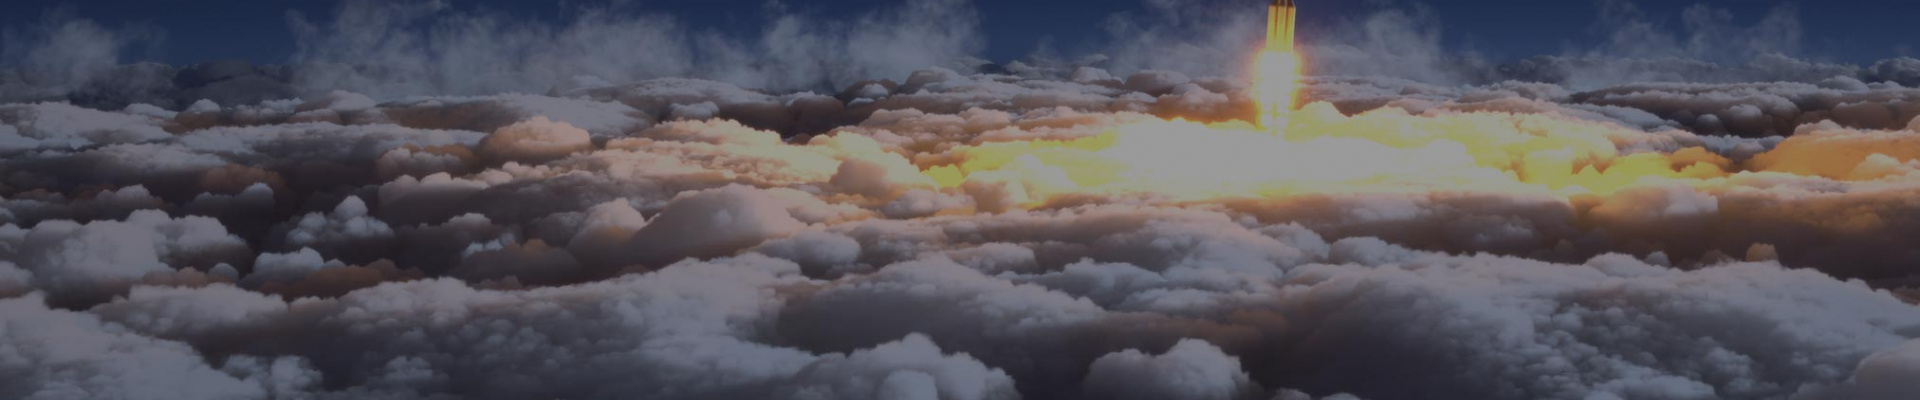 Rocket flies through clouds